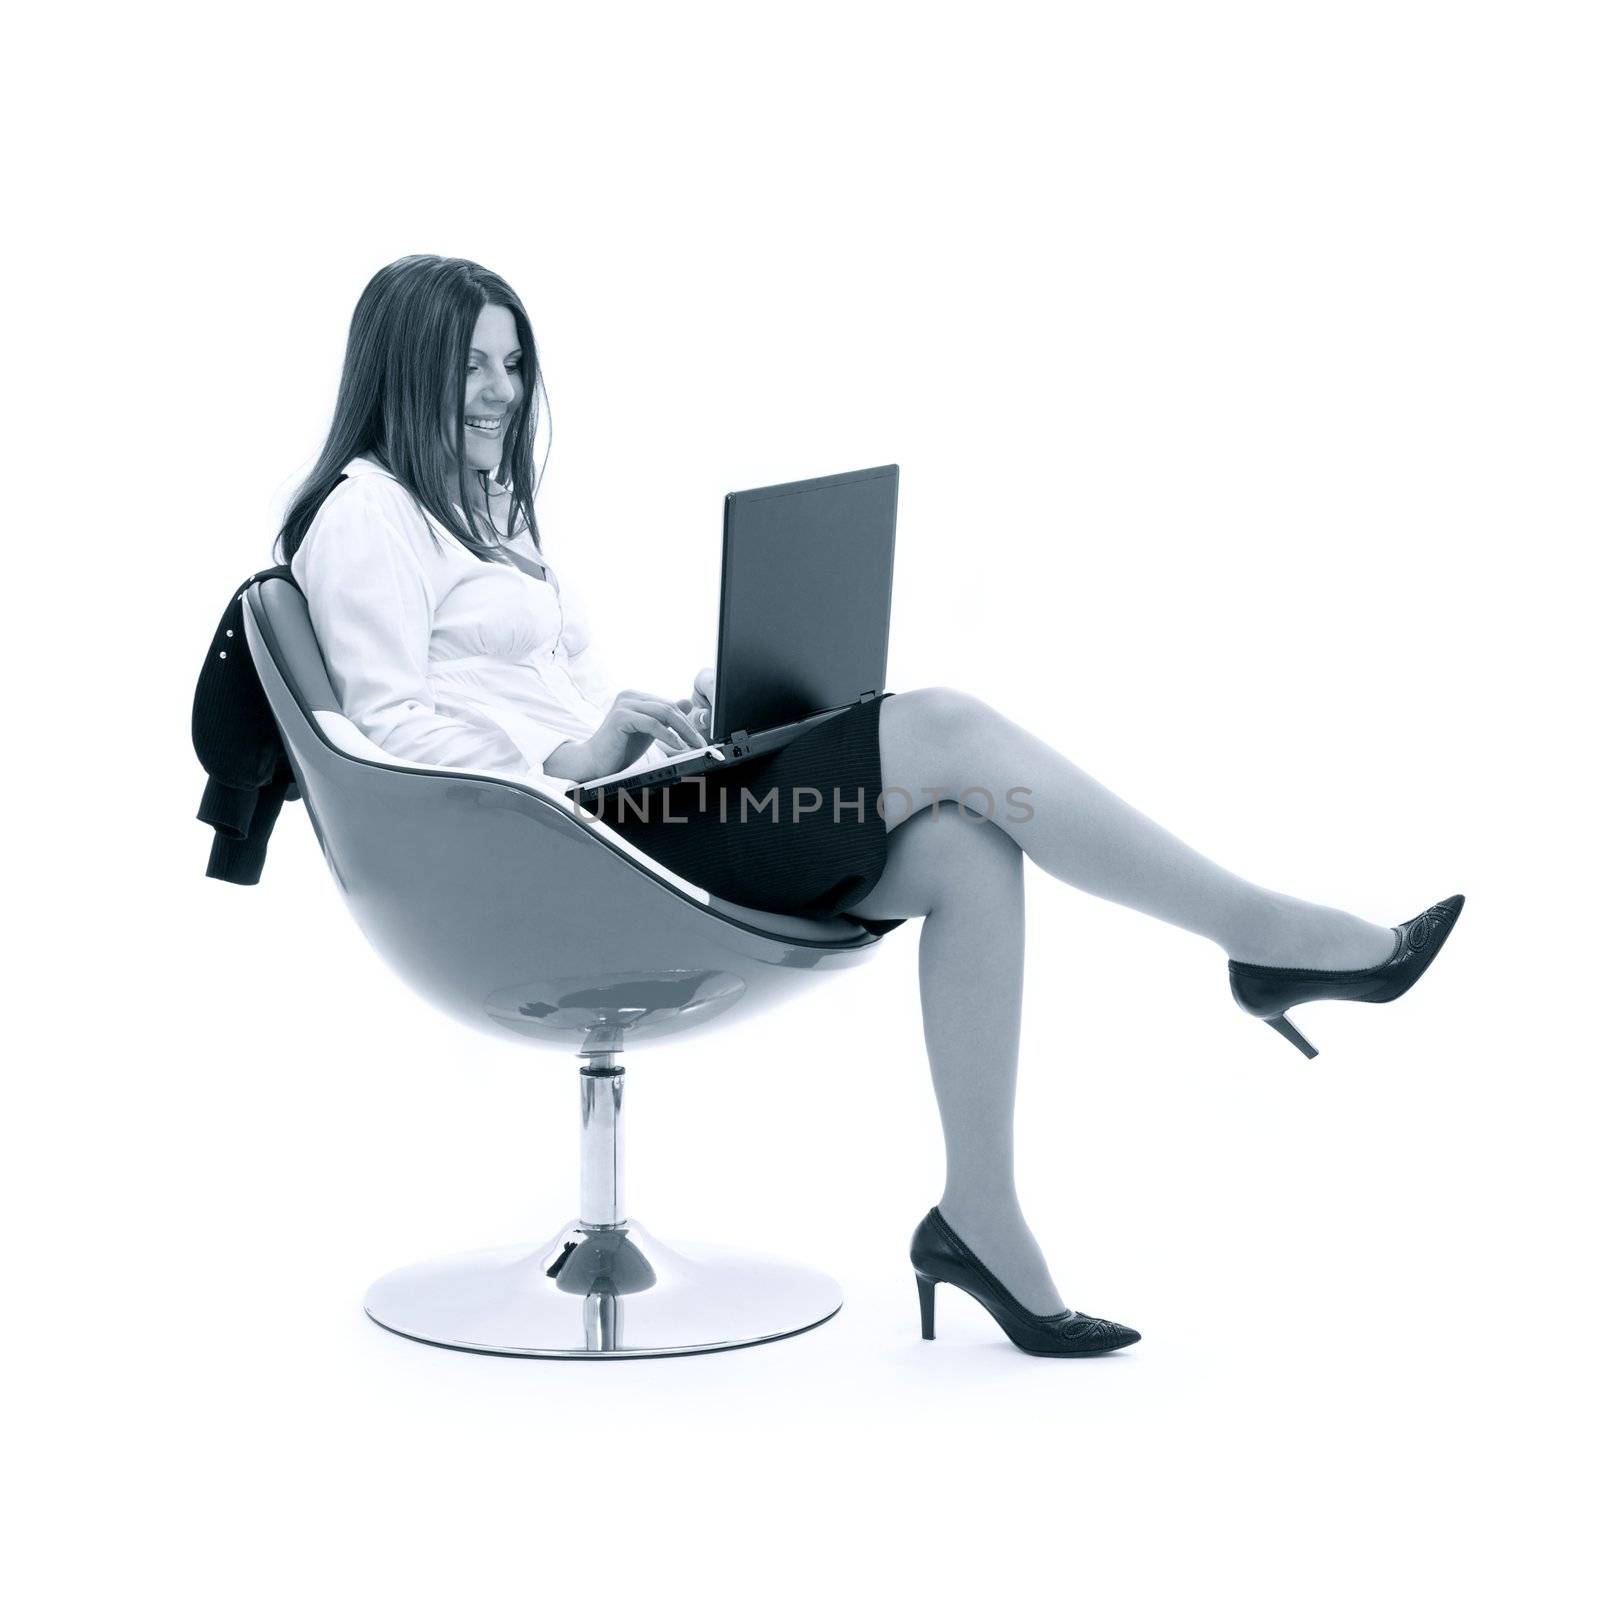 monochrome businesswoman with laptop in orange chair by dolgachov